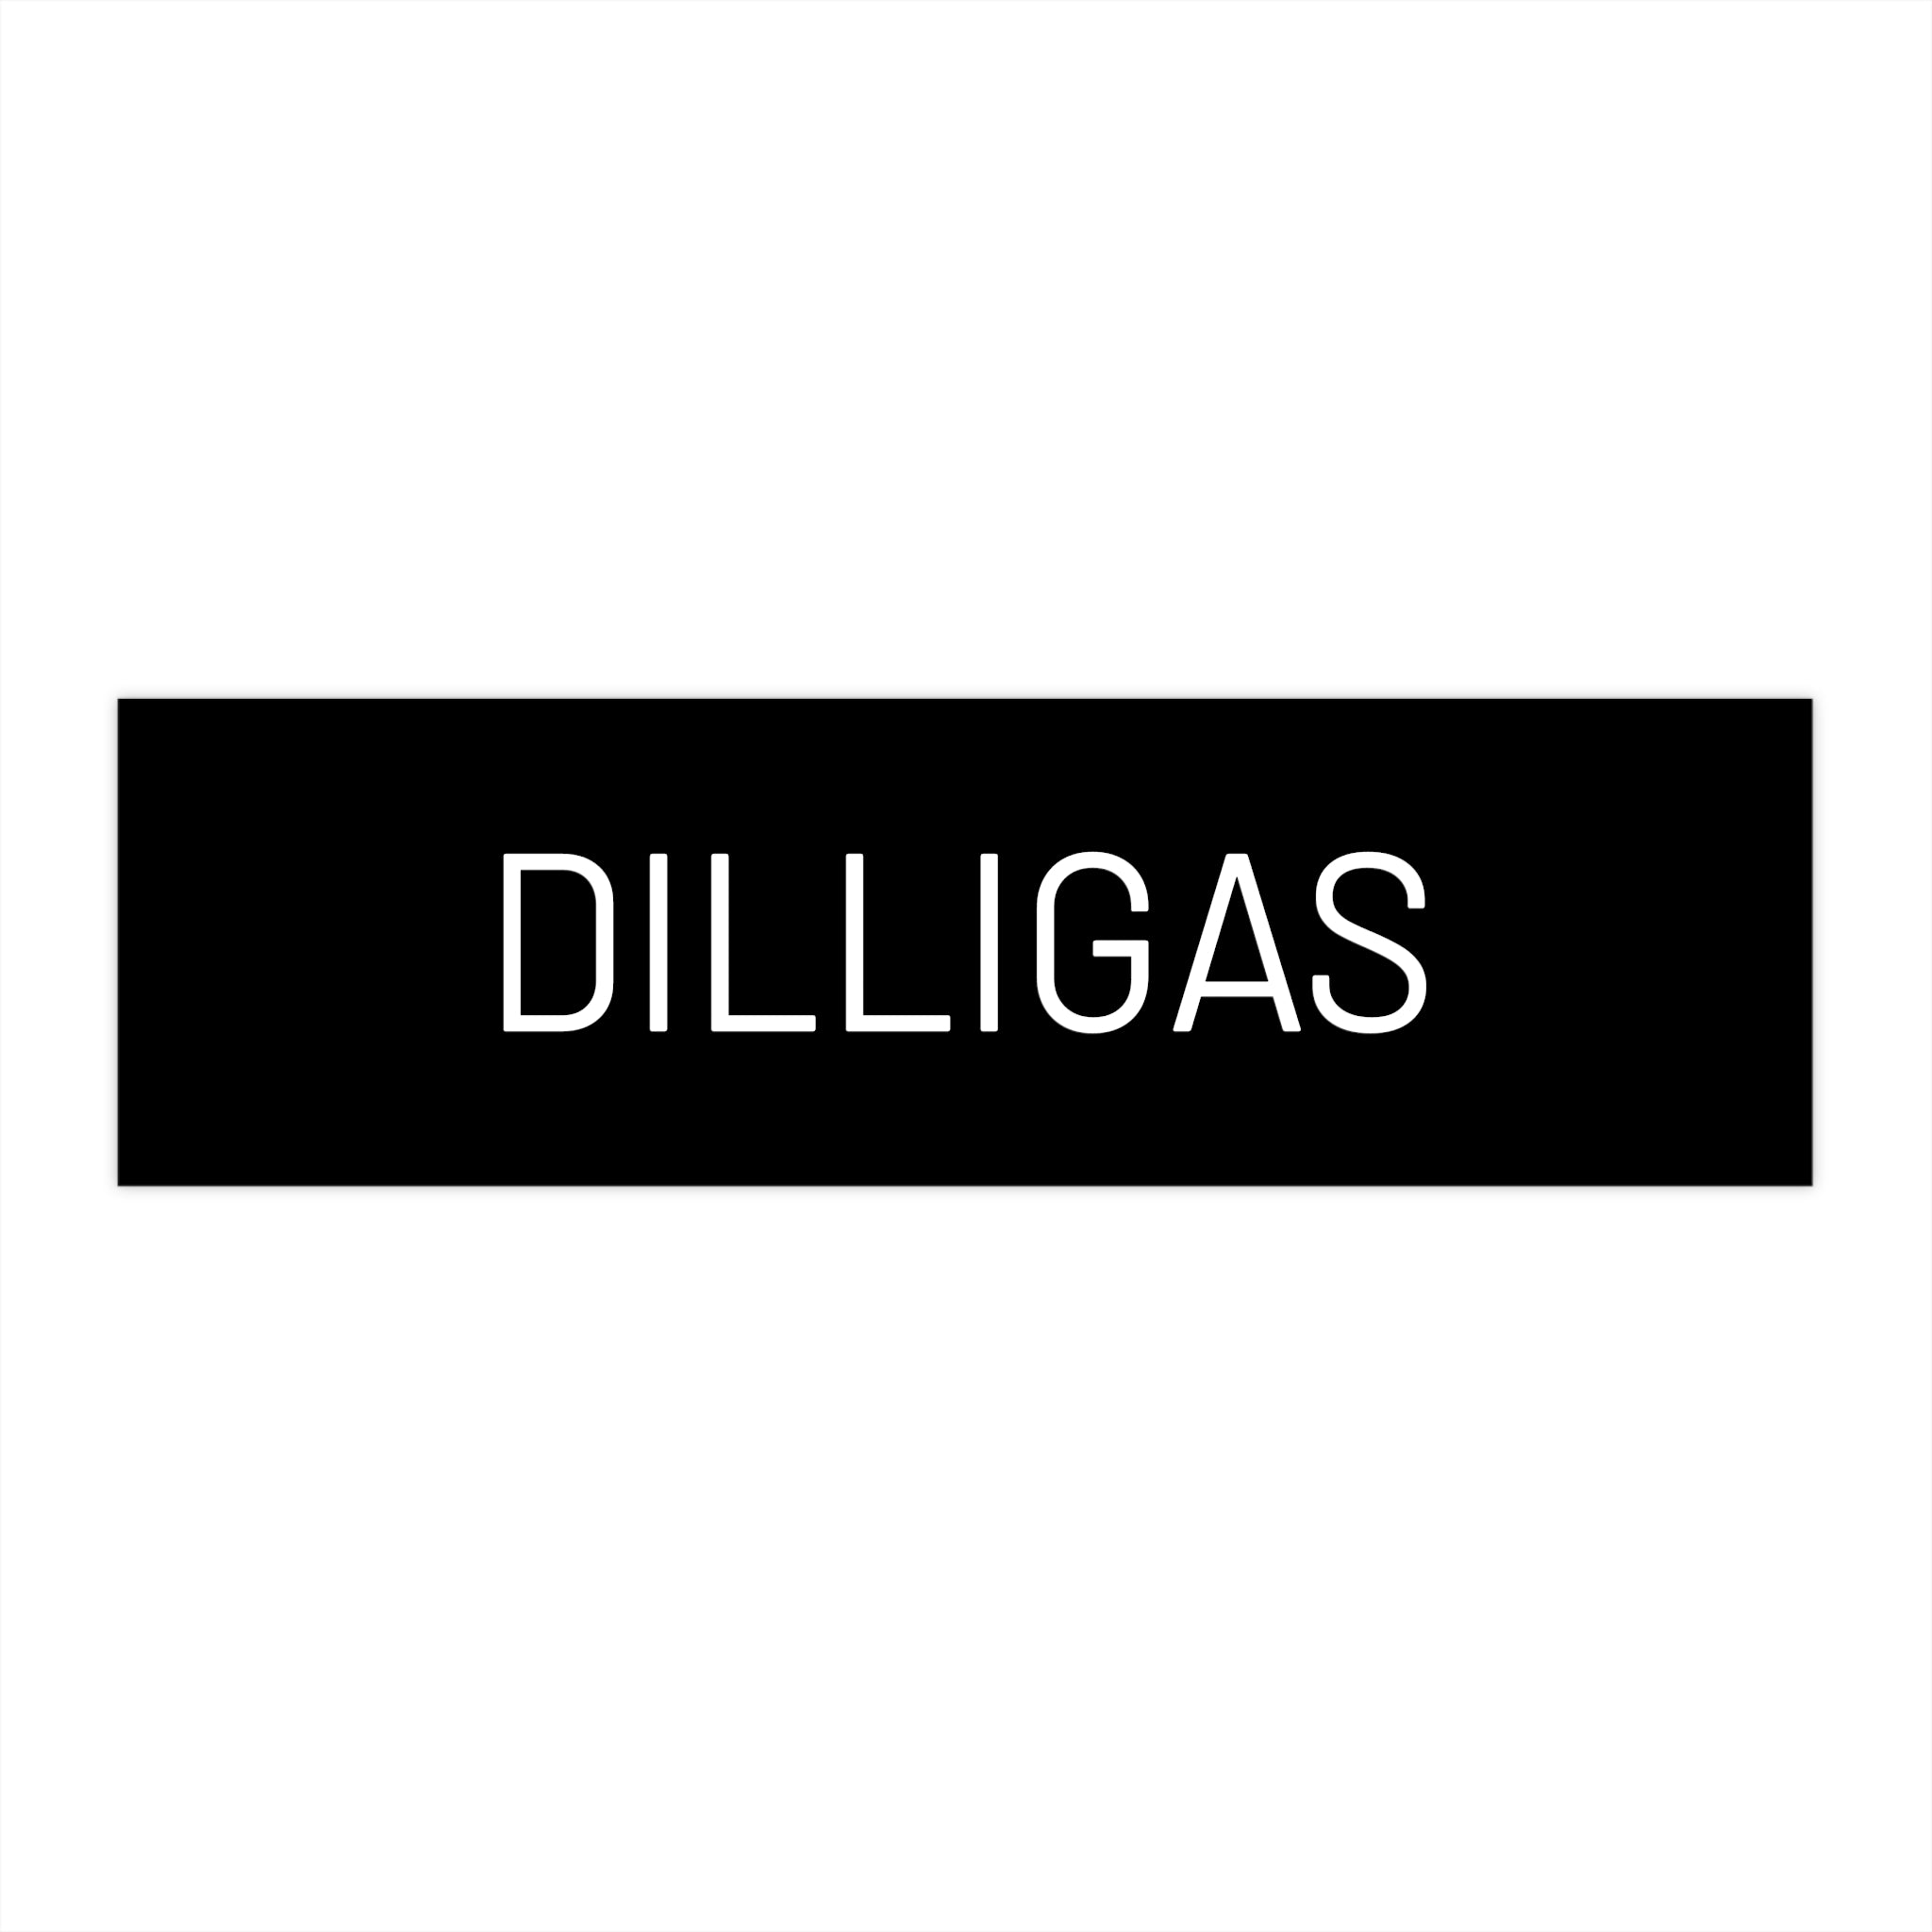 DILLIGAS ~ Bumper Stickers